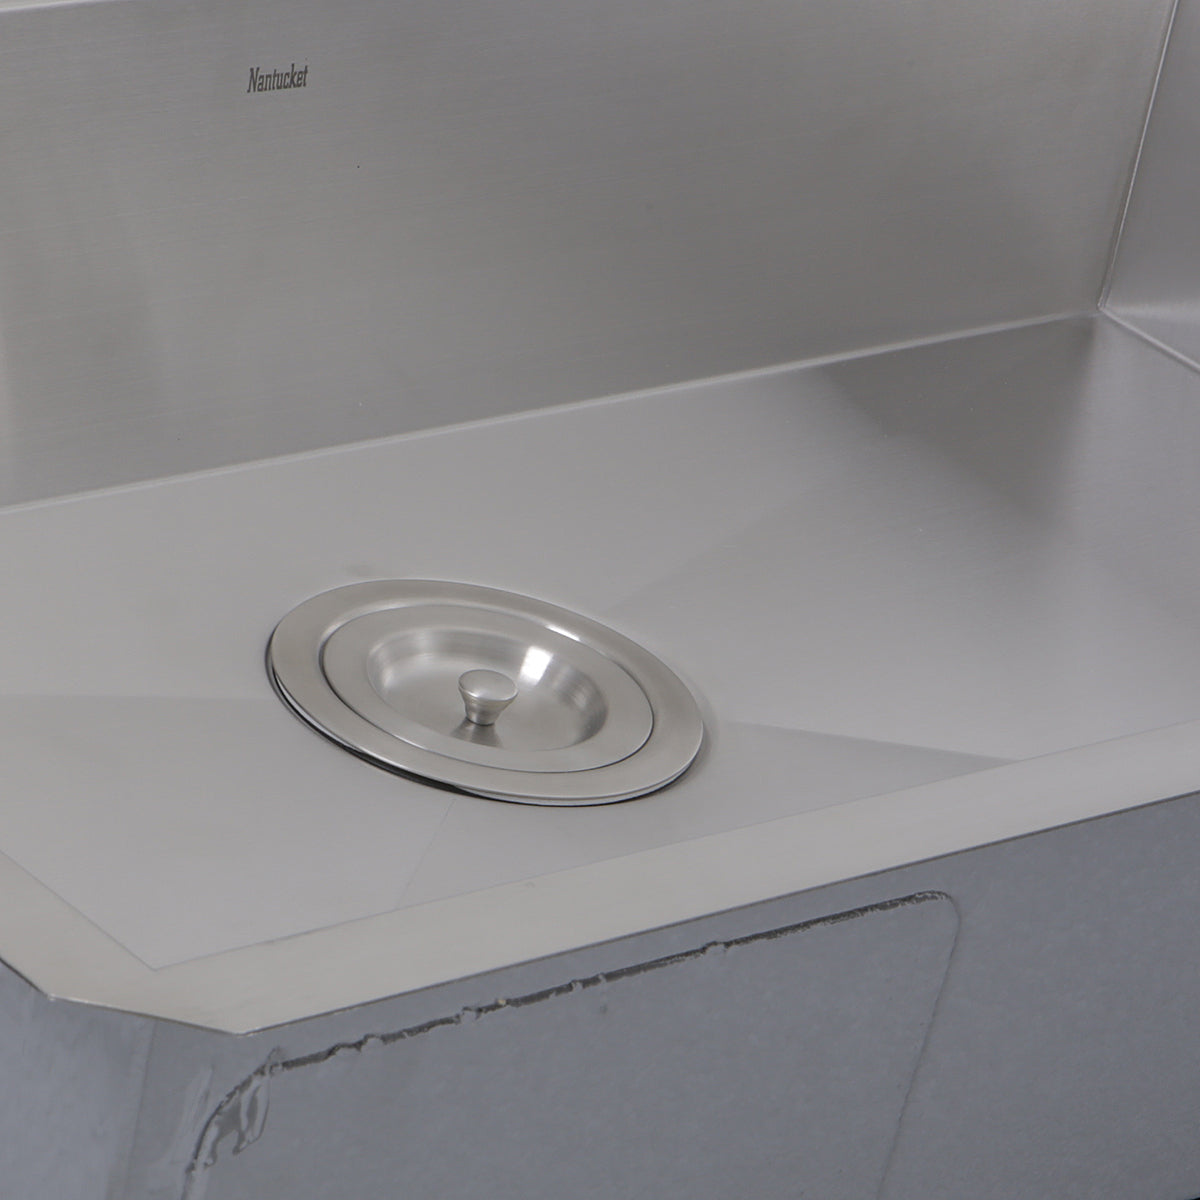 Nantucket Sinks 30-inch Single Bowl Zero Radius ADA Stainless Steel Kitchen Sink